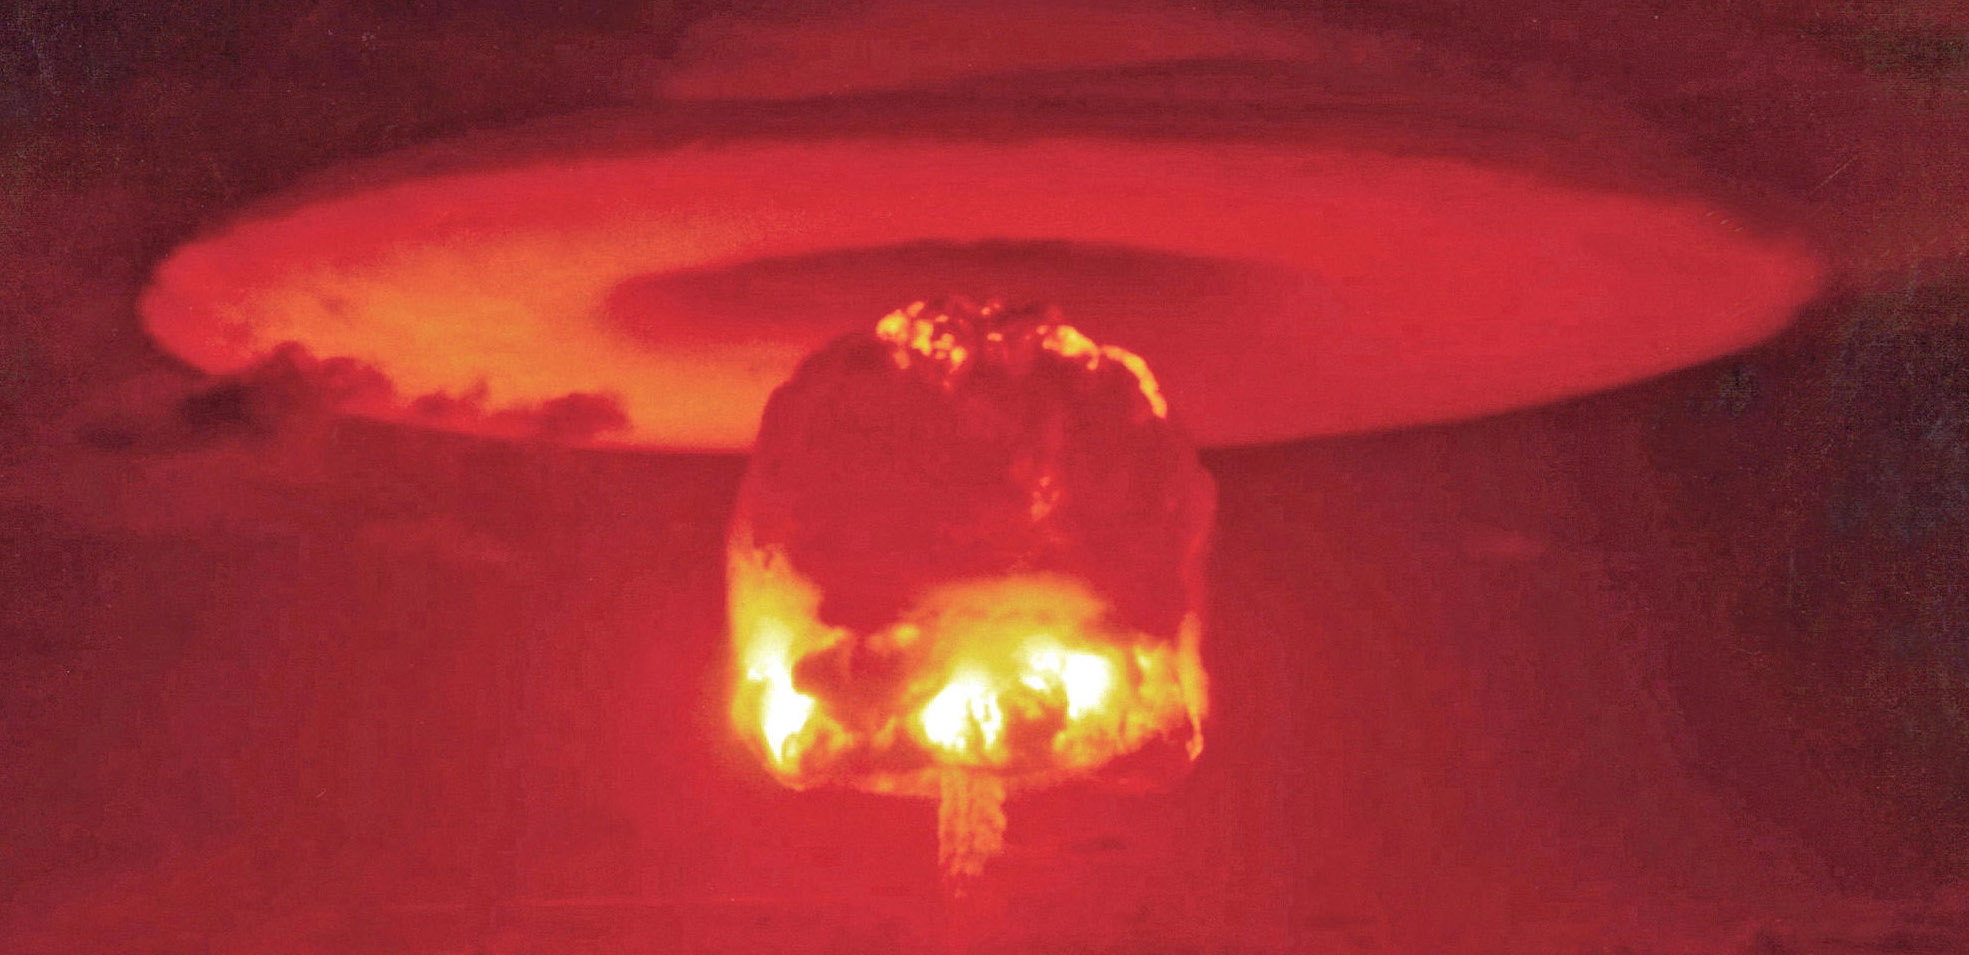 Casle Romeo Nuclear Blast 1954